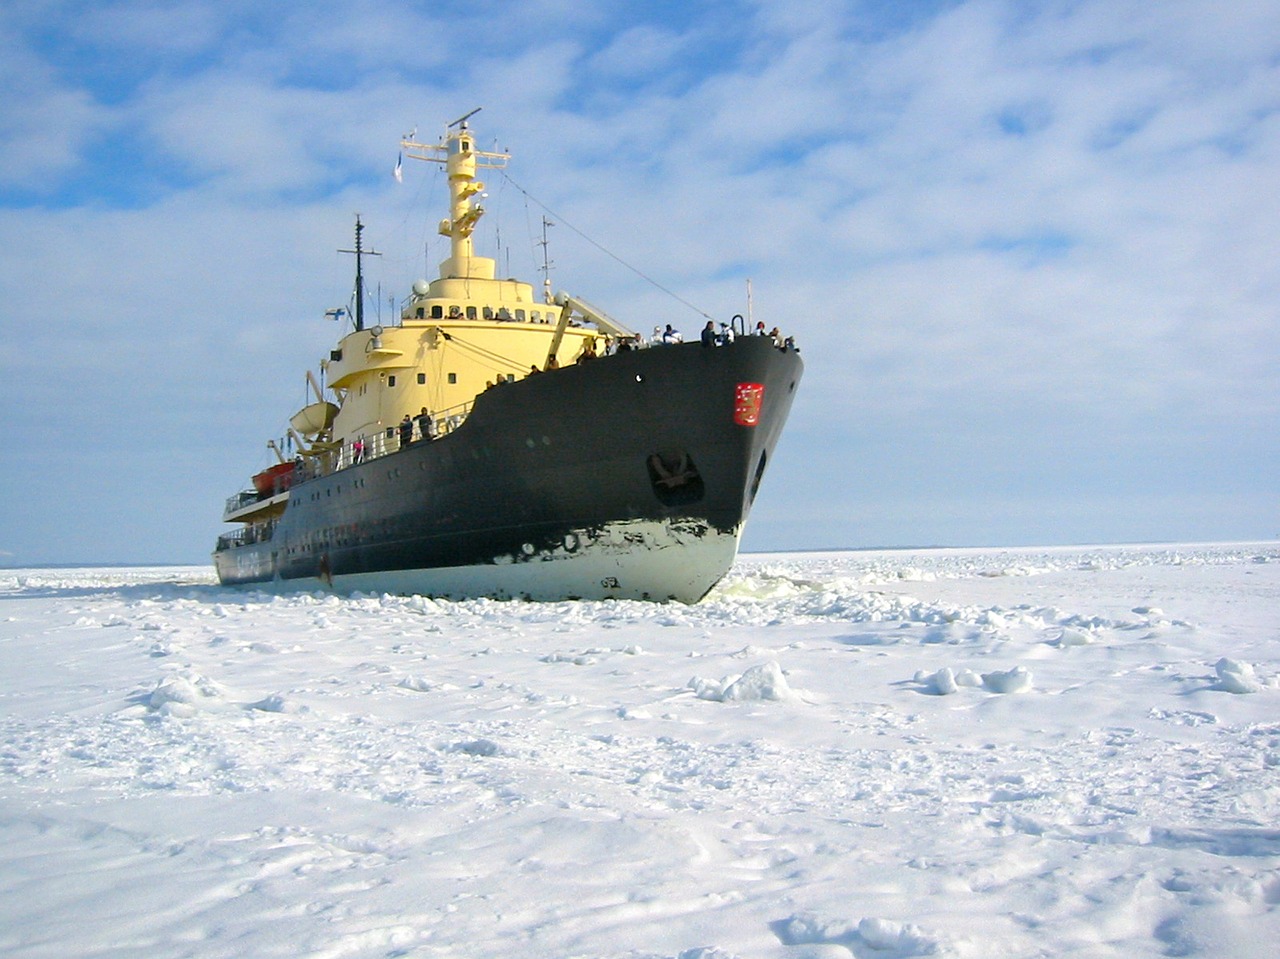 icebreaker gulf of bothnia mer de glace free photo